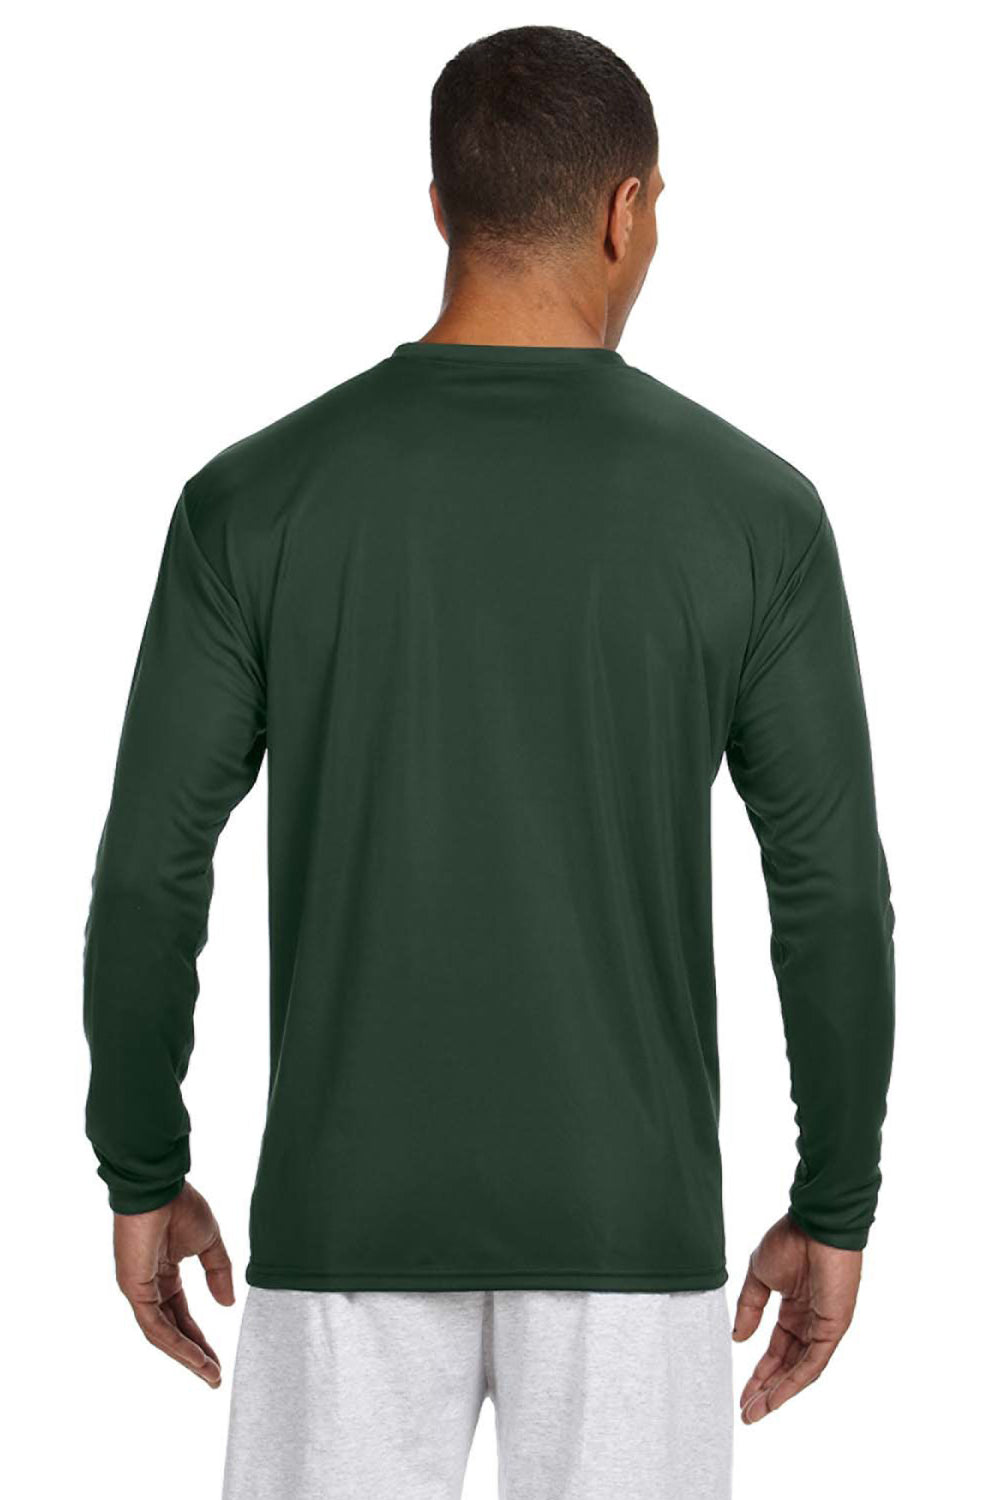 A4 N3165 Mens Performance Moisture Wicking Long Sleeve Crewneck T-Shirt Forest Green Model Back